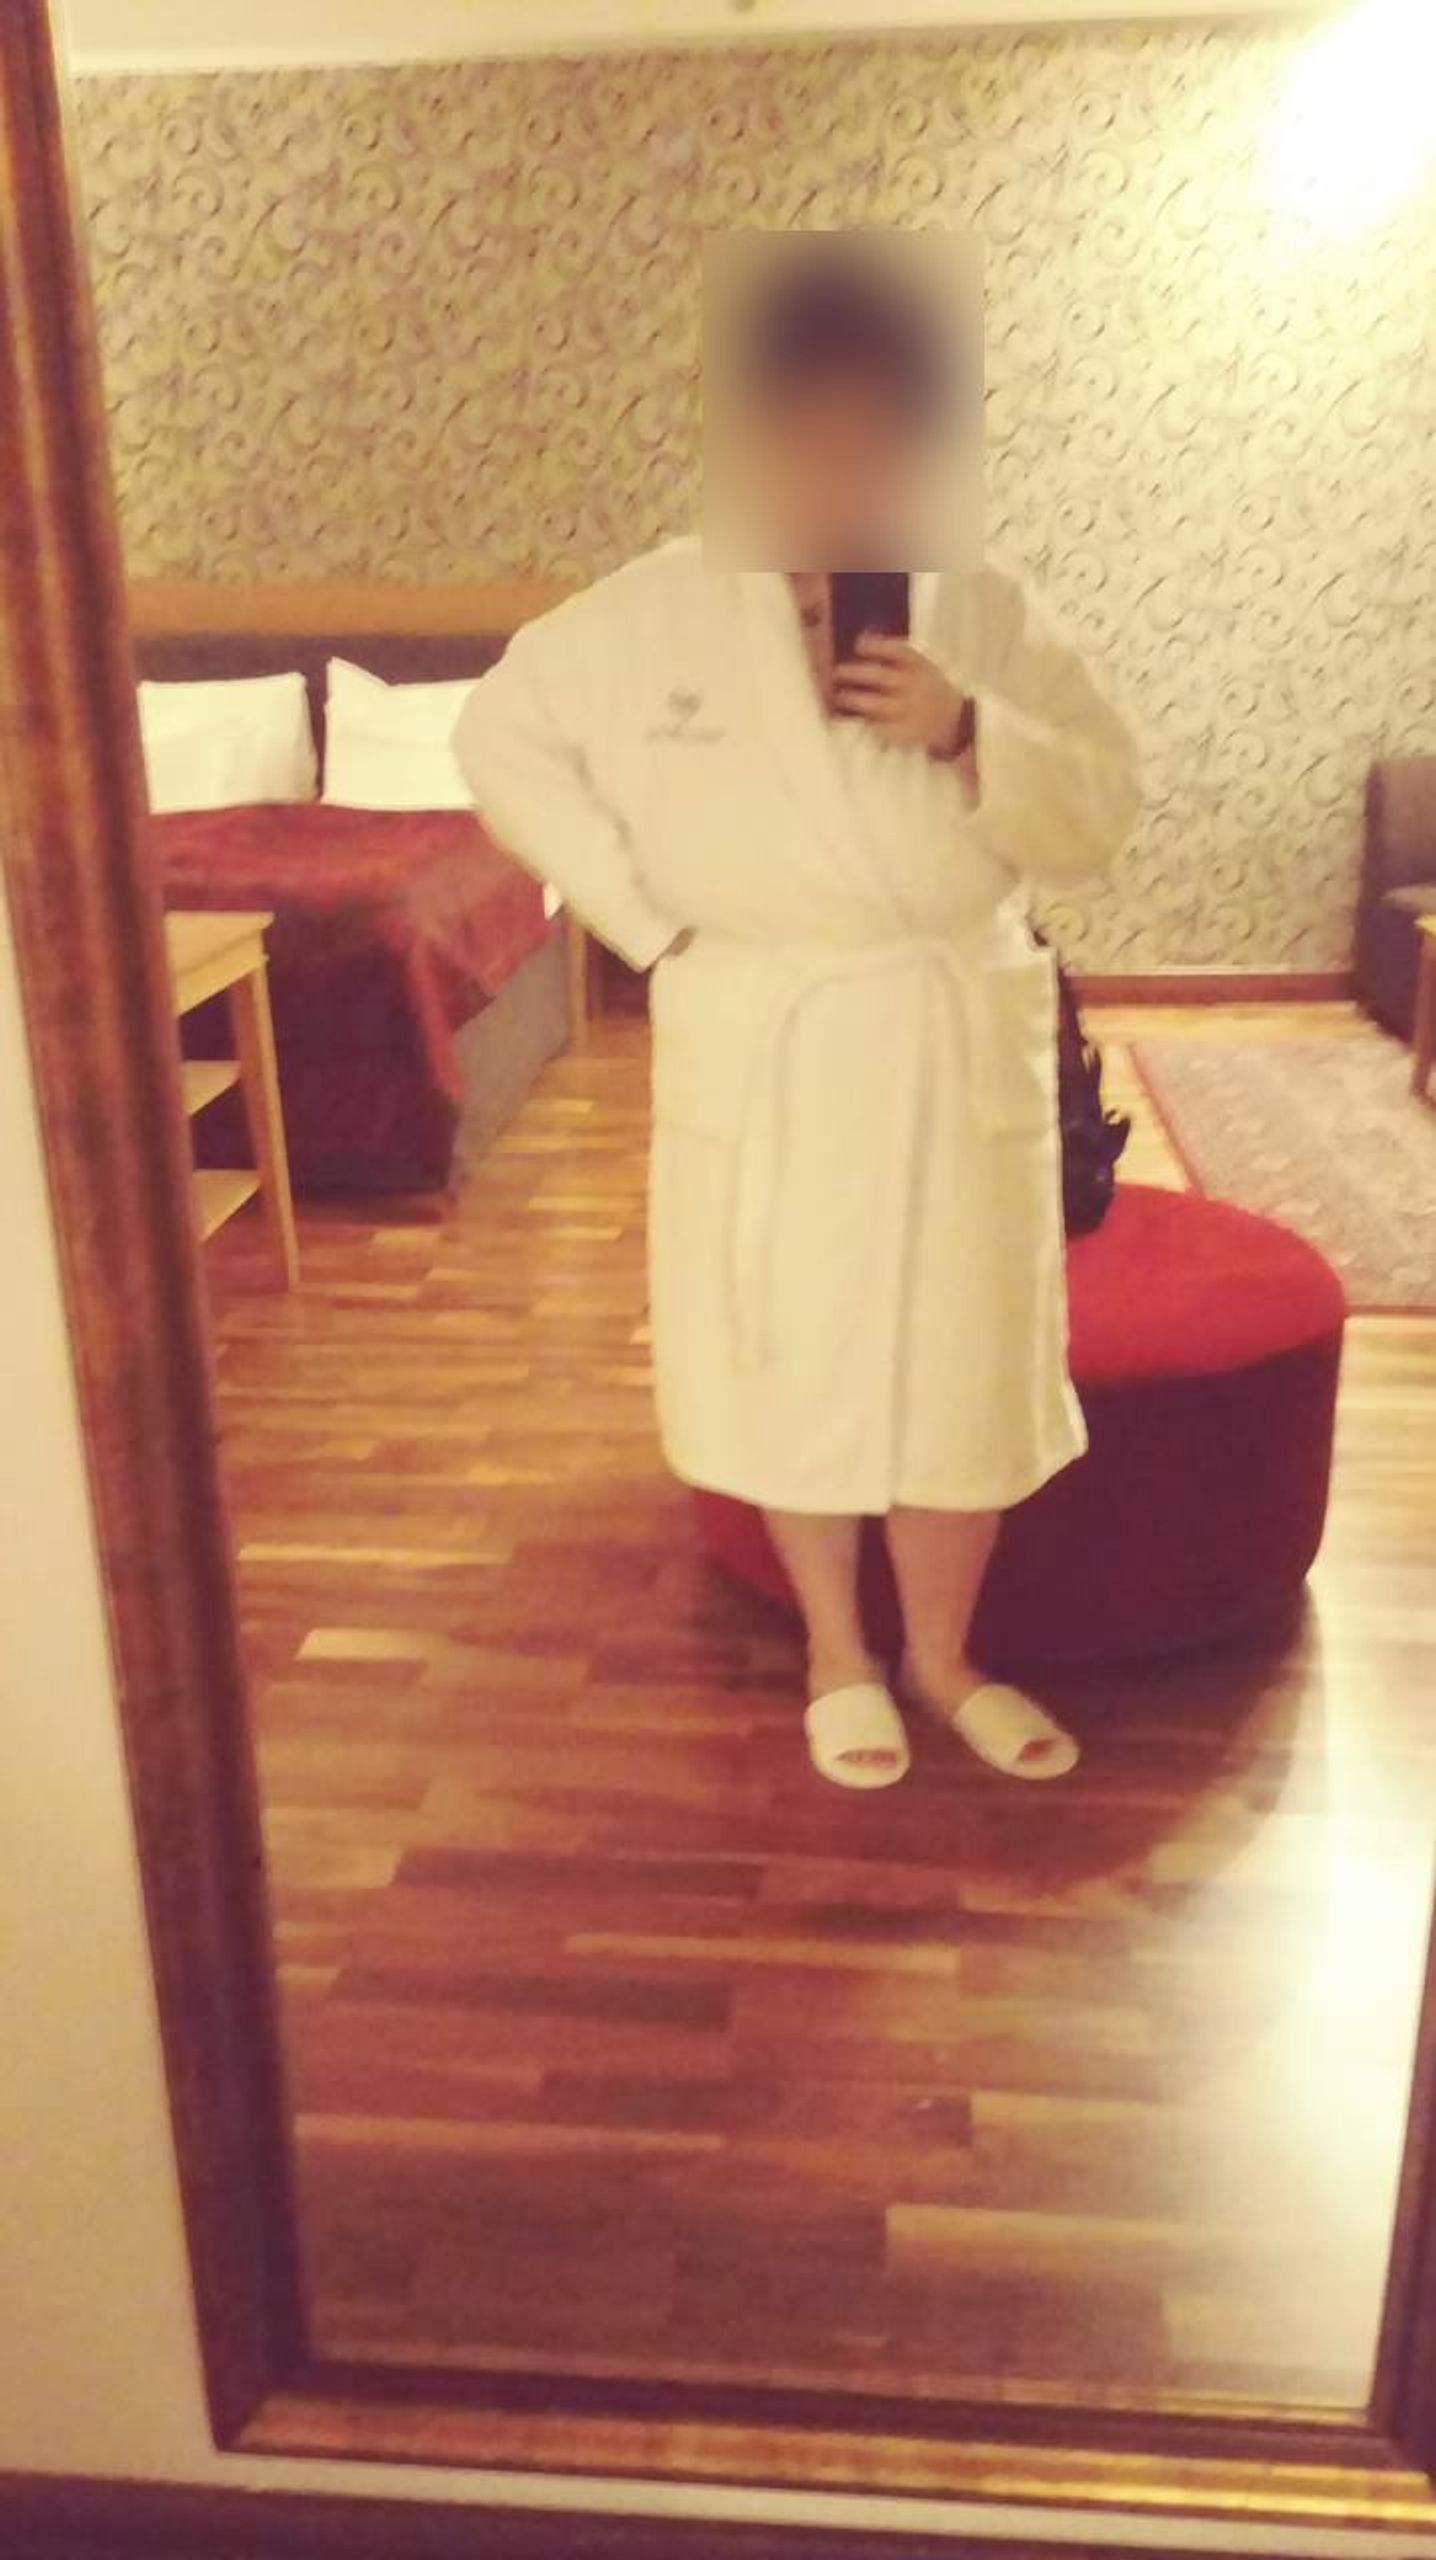 Masha in the hotel room waiting for Prigozhin